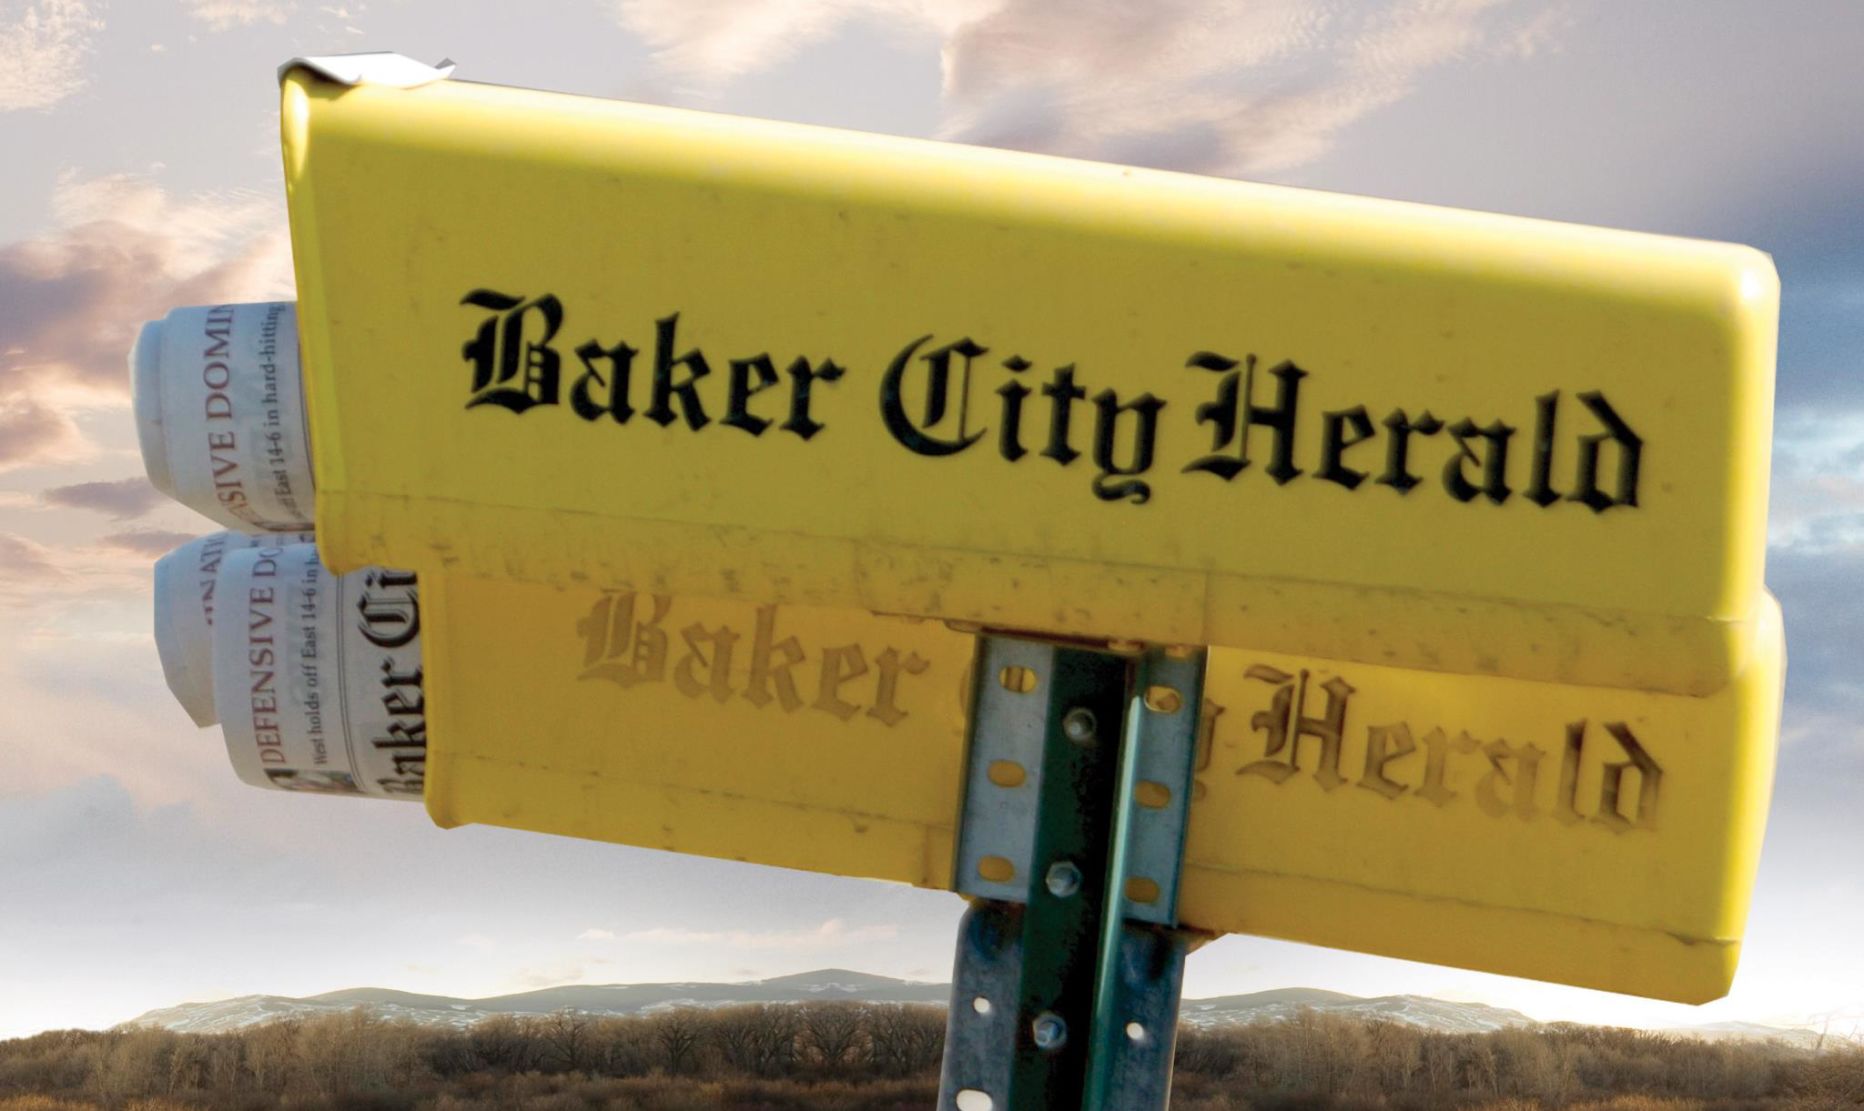 Western water data coming to new online platform - Baker City Herald